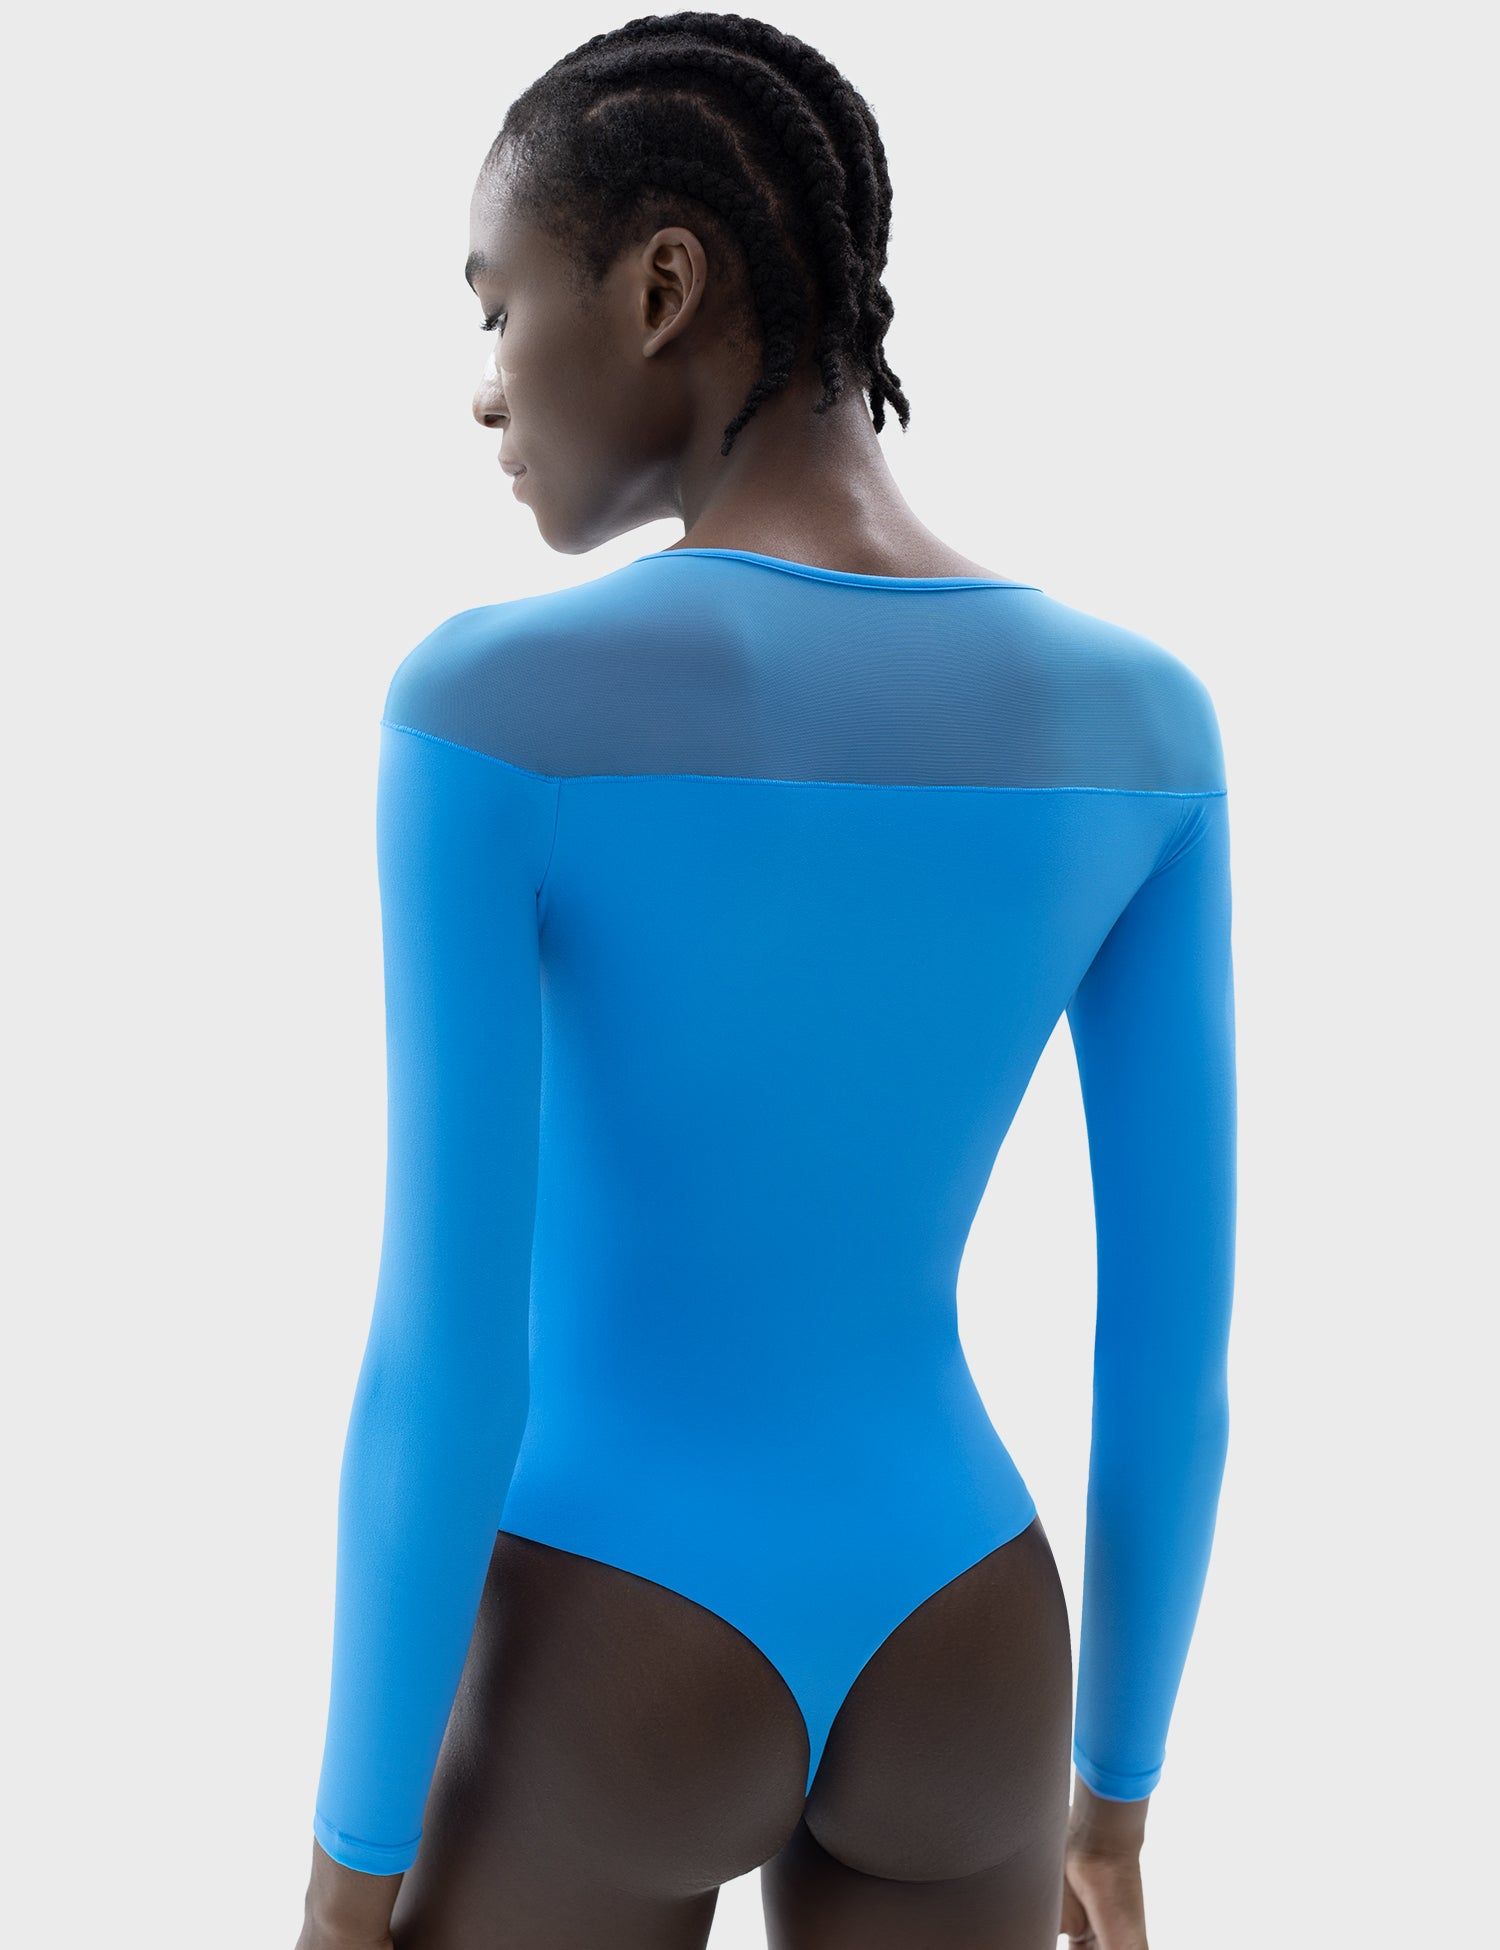 A Bodysuit: Pumiey Long Sleeve Bodysuit